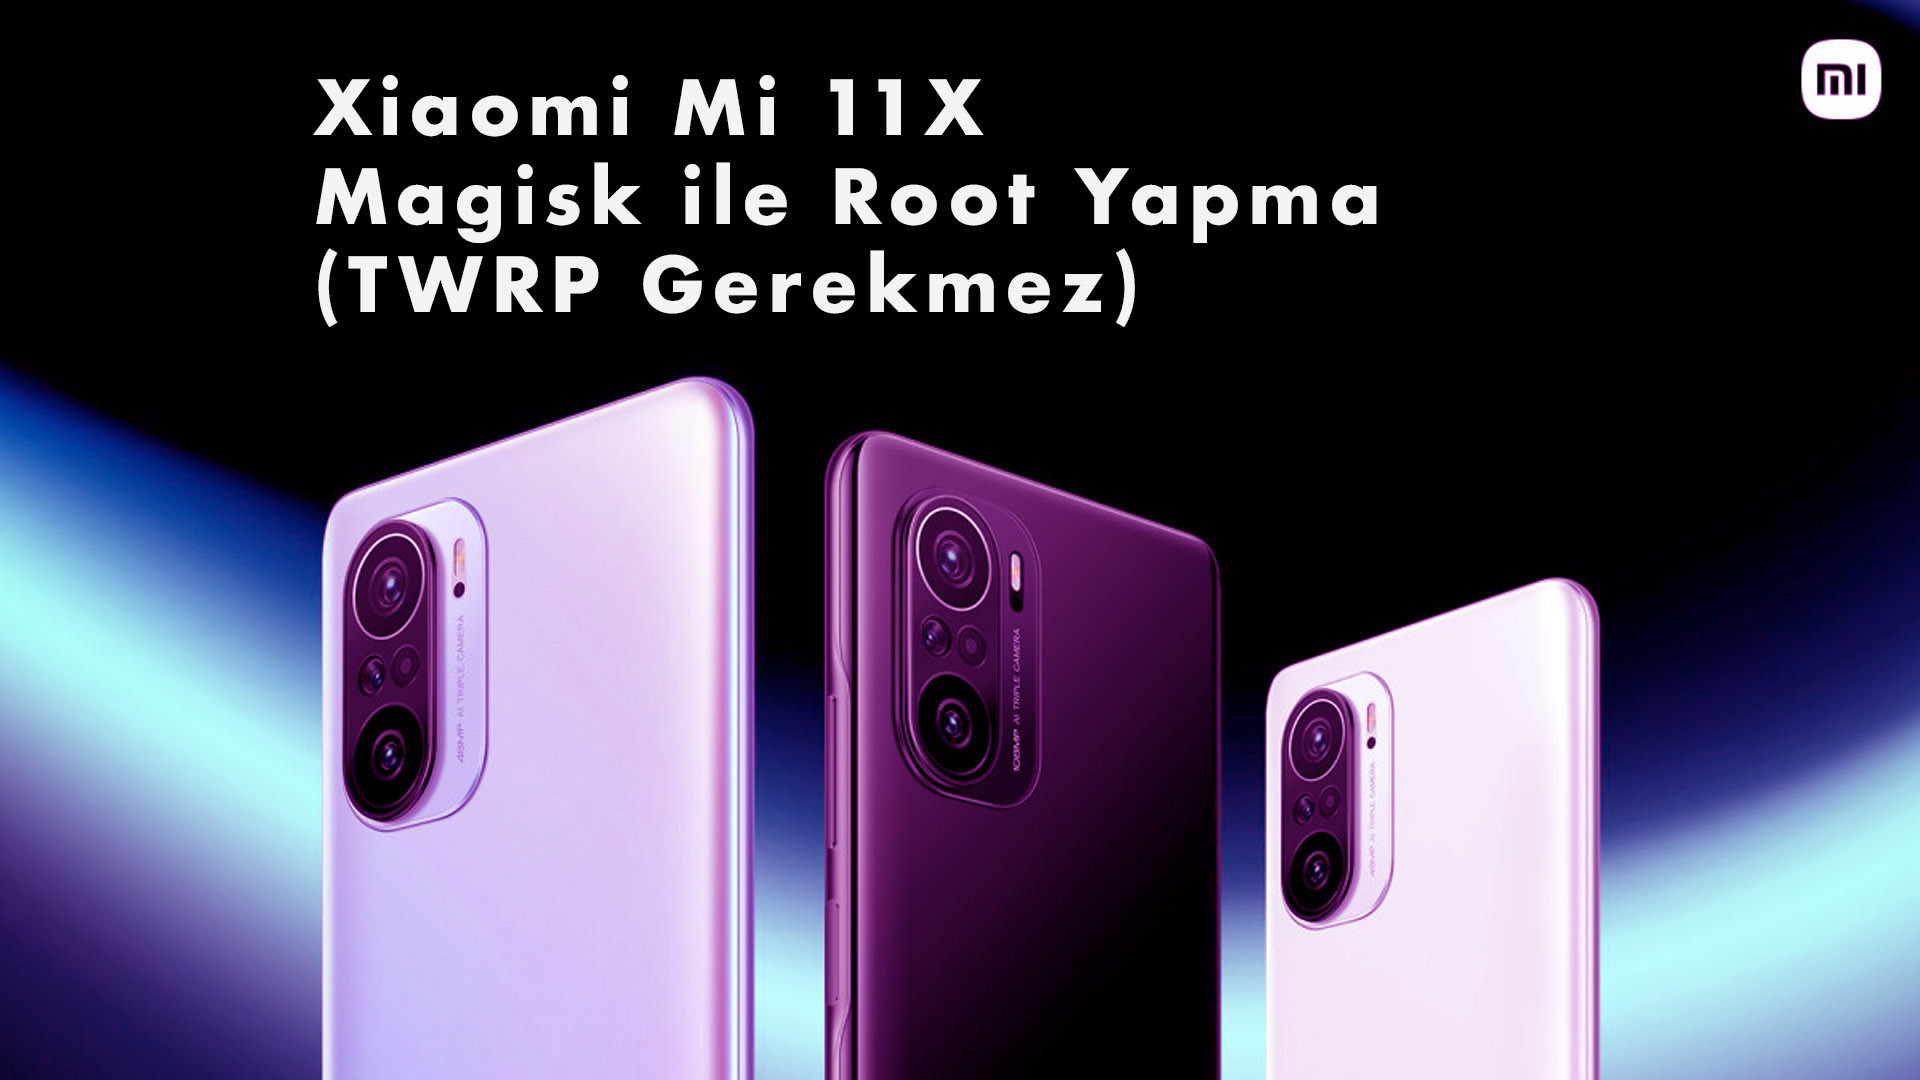 Xiaomi Mi 11X Magisk ile Root Yapma (TWRP Gerekmez) xiaomi root yapma mi 11x magisk 